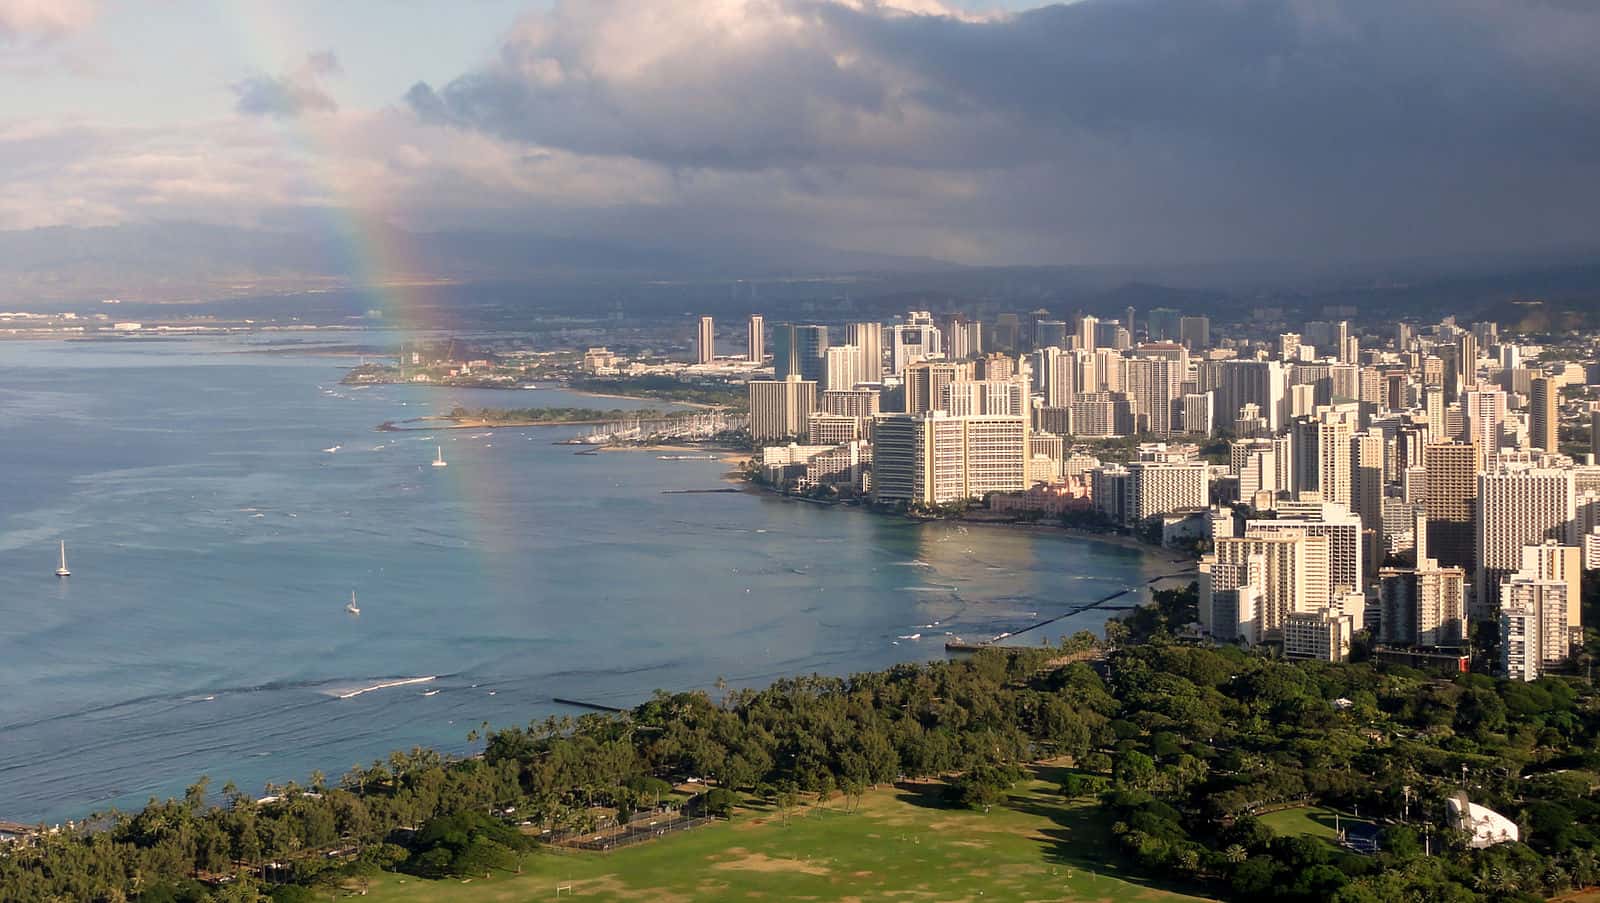 Waikiki view from Diamond Head - Oahu, Hawaii (image courtesy of Cristo Vlahos via Wikimedia Commons)